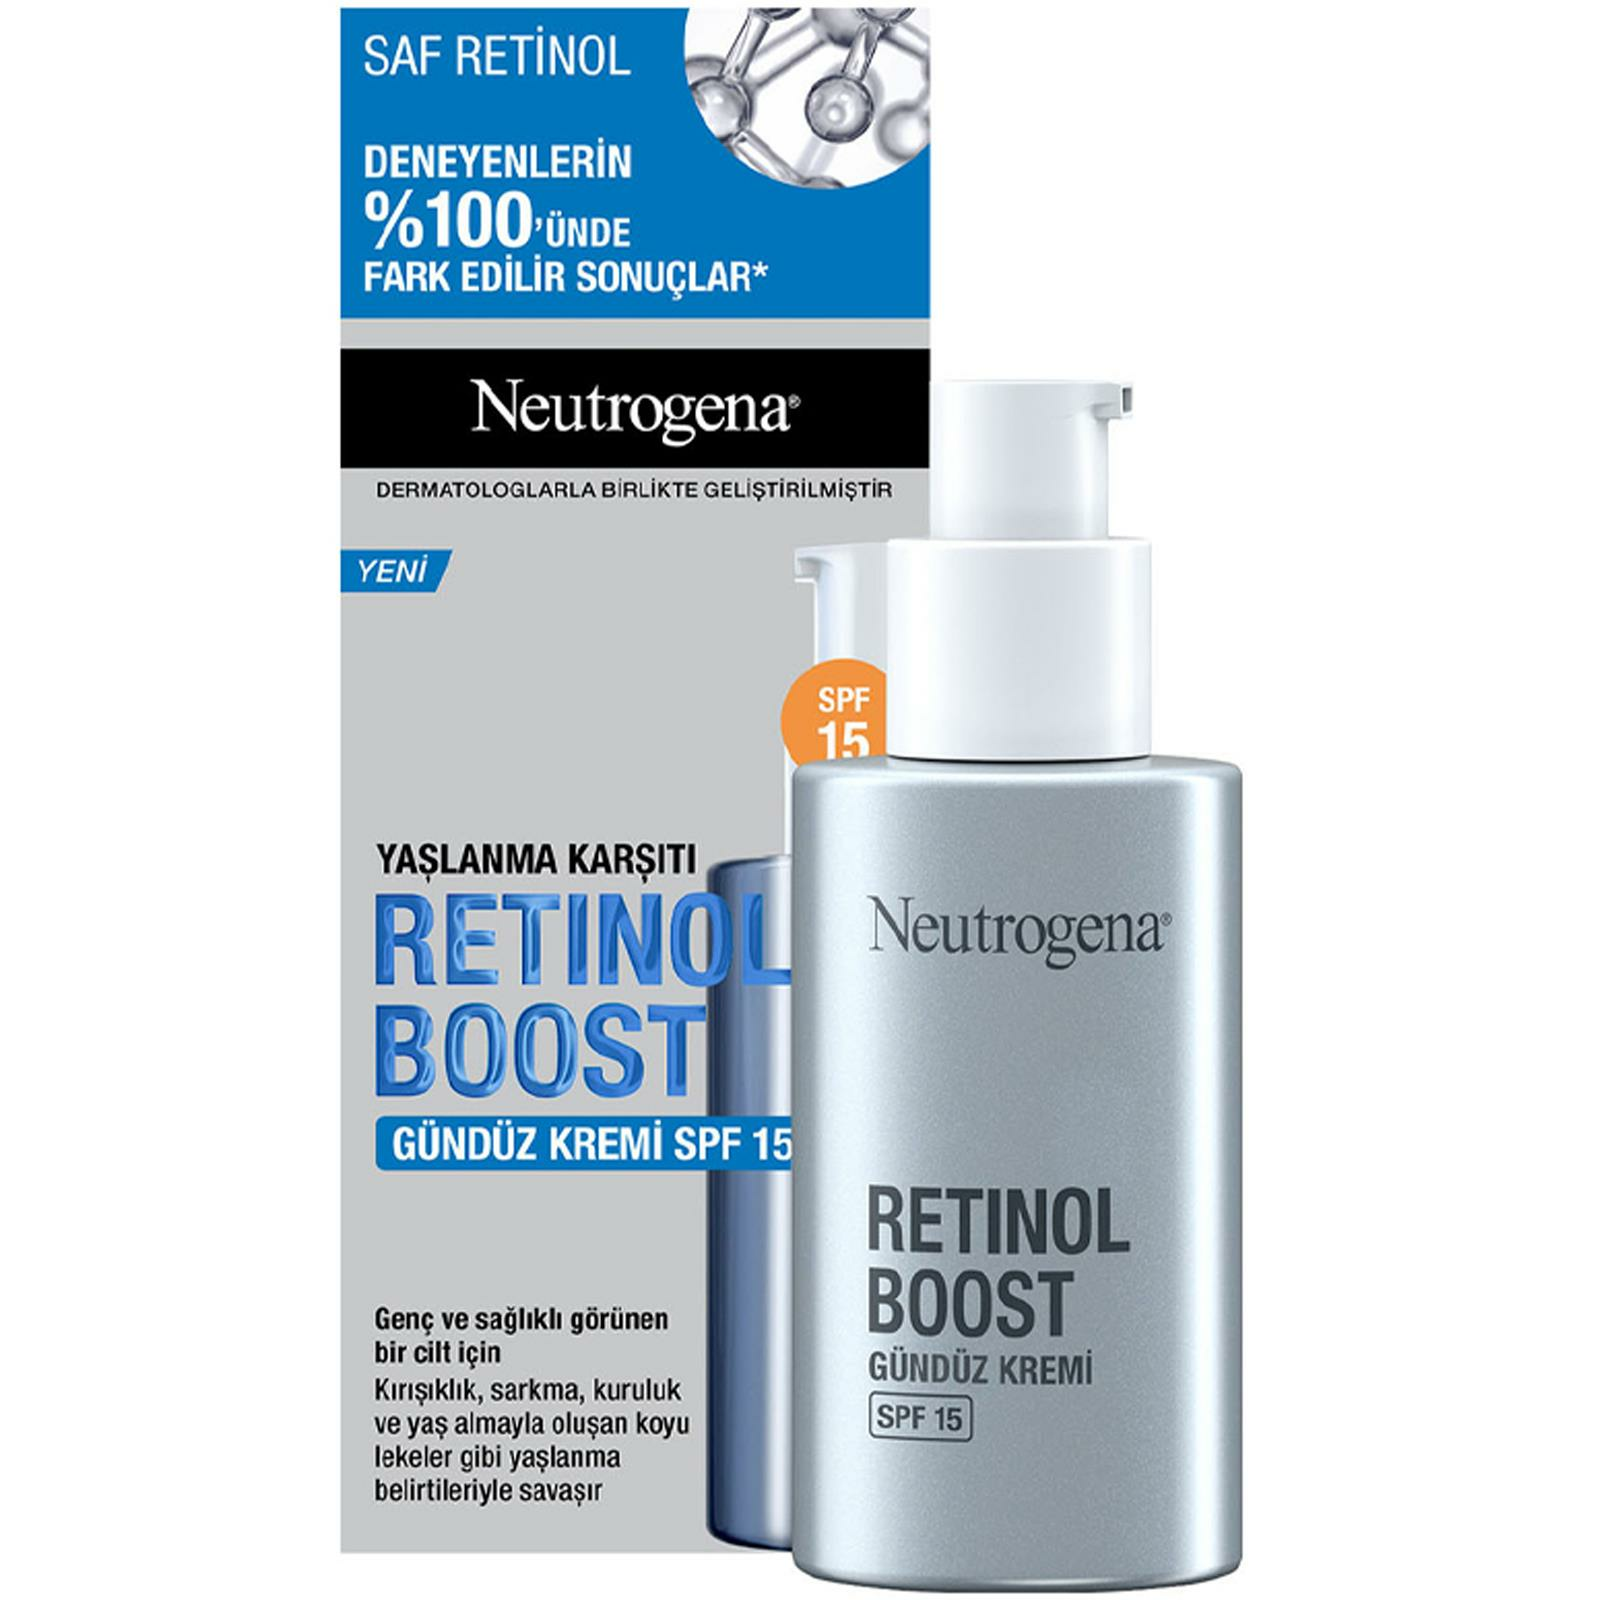 Neutrogena Retinol Boost Yaşlan ma Karşıtı Gündüz Kremi SPF 15​ 50 ml